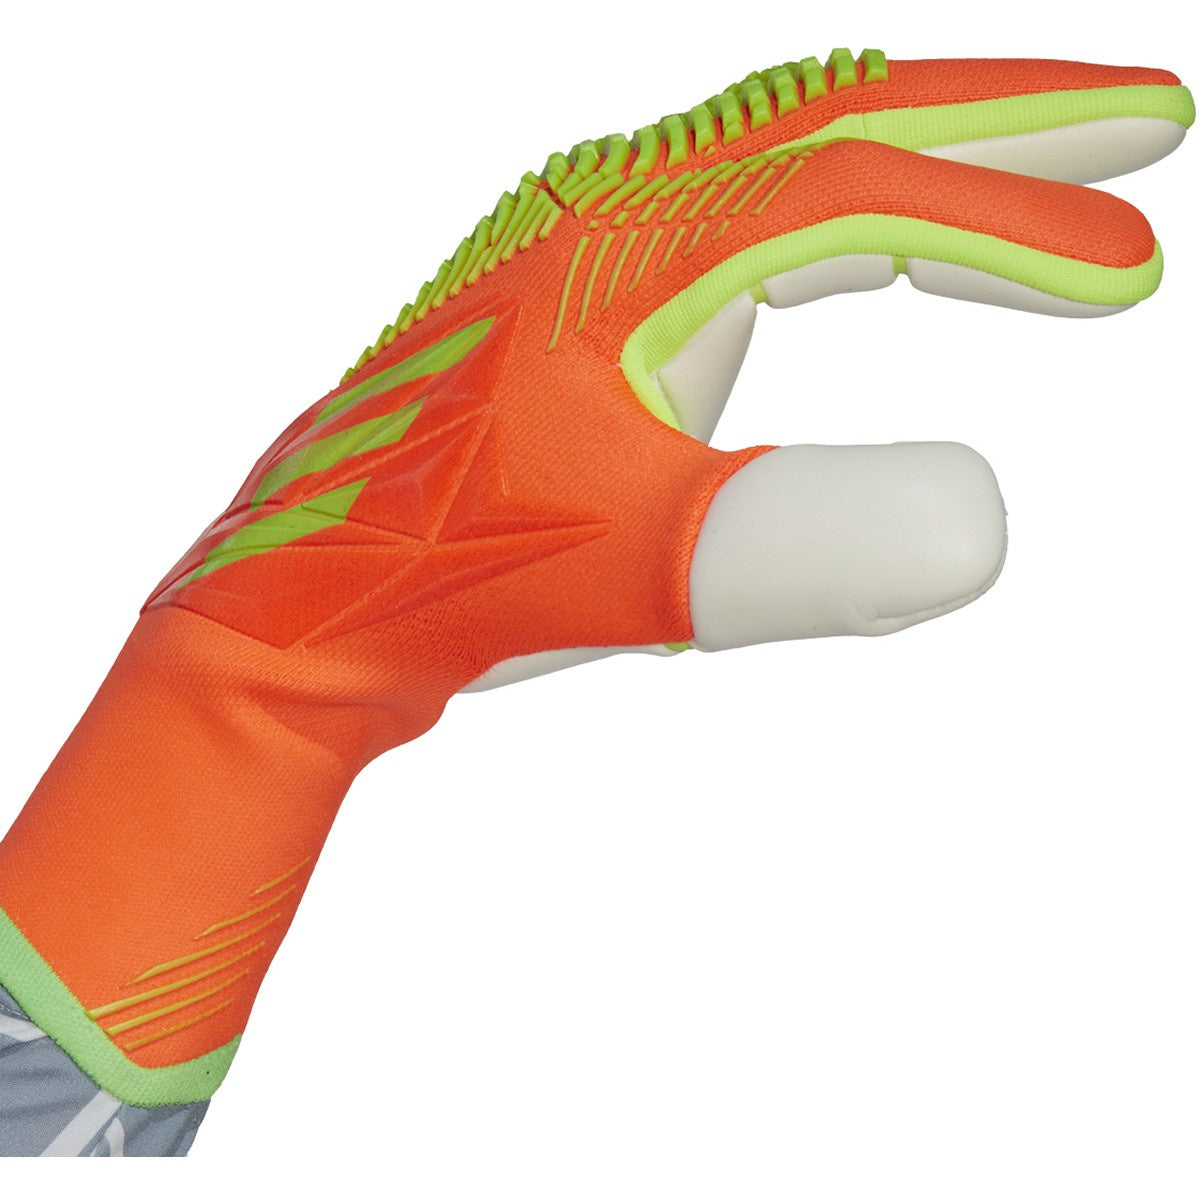 Adidas Predator GL Pro GK Gloves